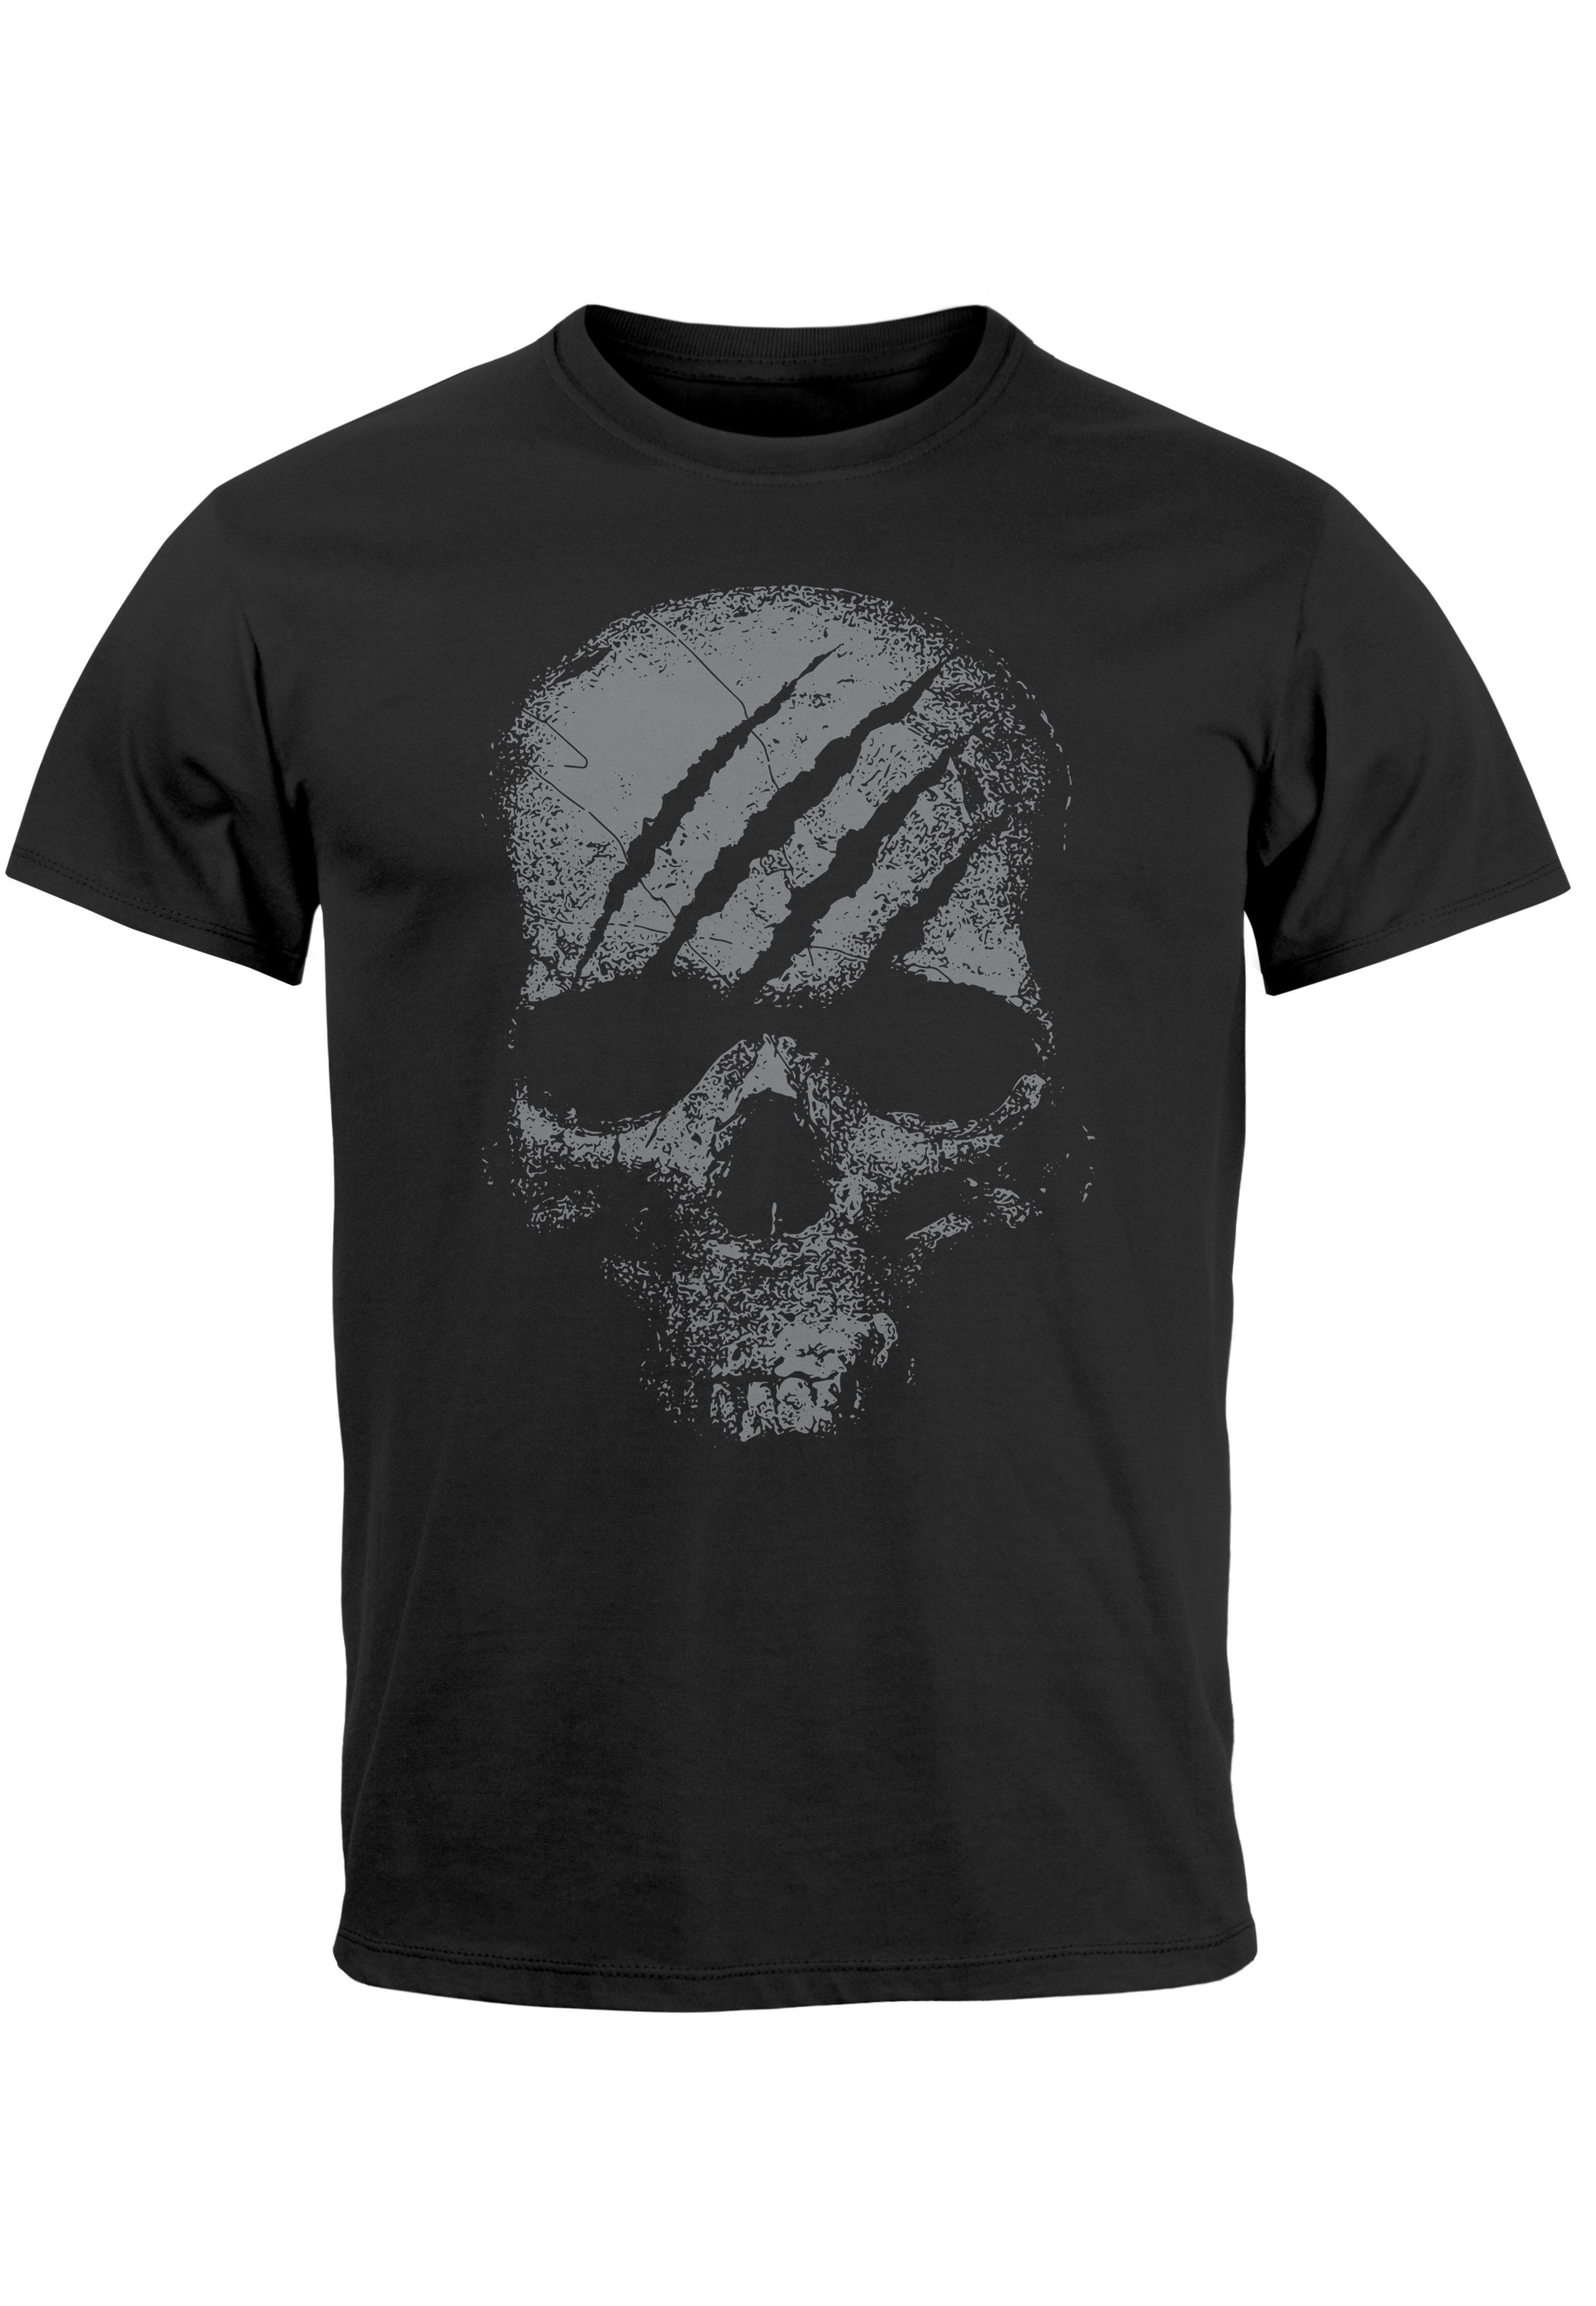 Neverless Print-Shirt Herren T-Shirt Totenkopf Print Totenschädel schwarz Skelett mit Print Fas Skull Aufdruck